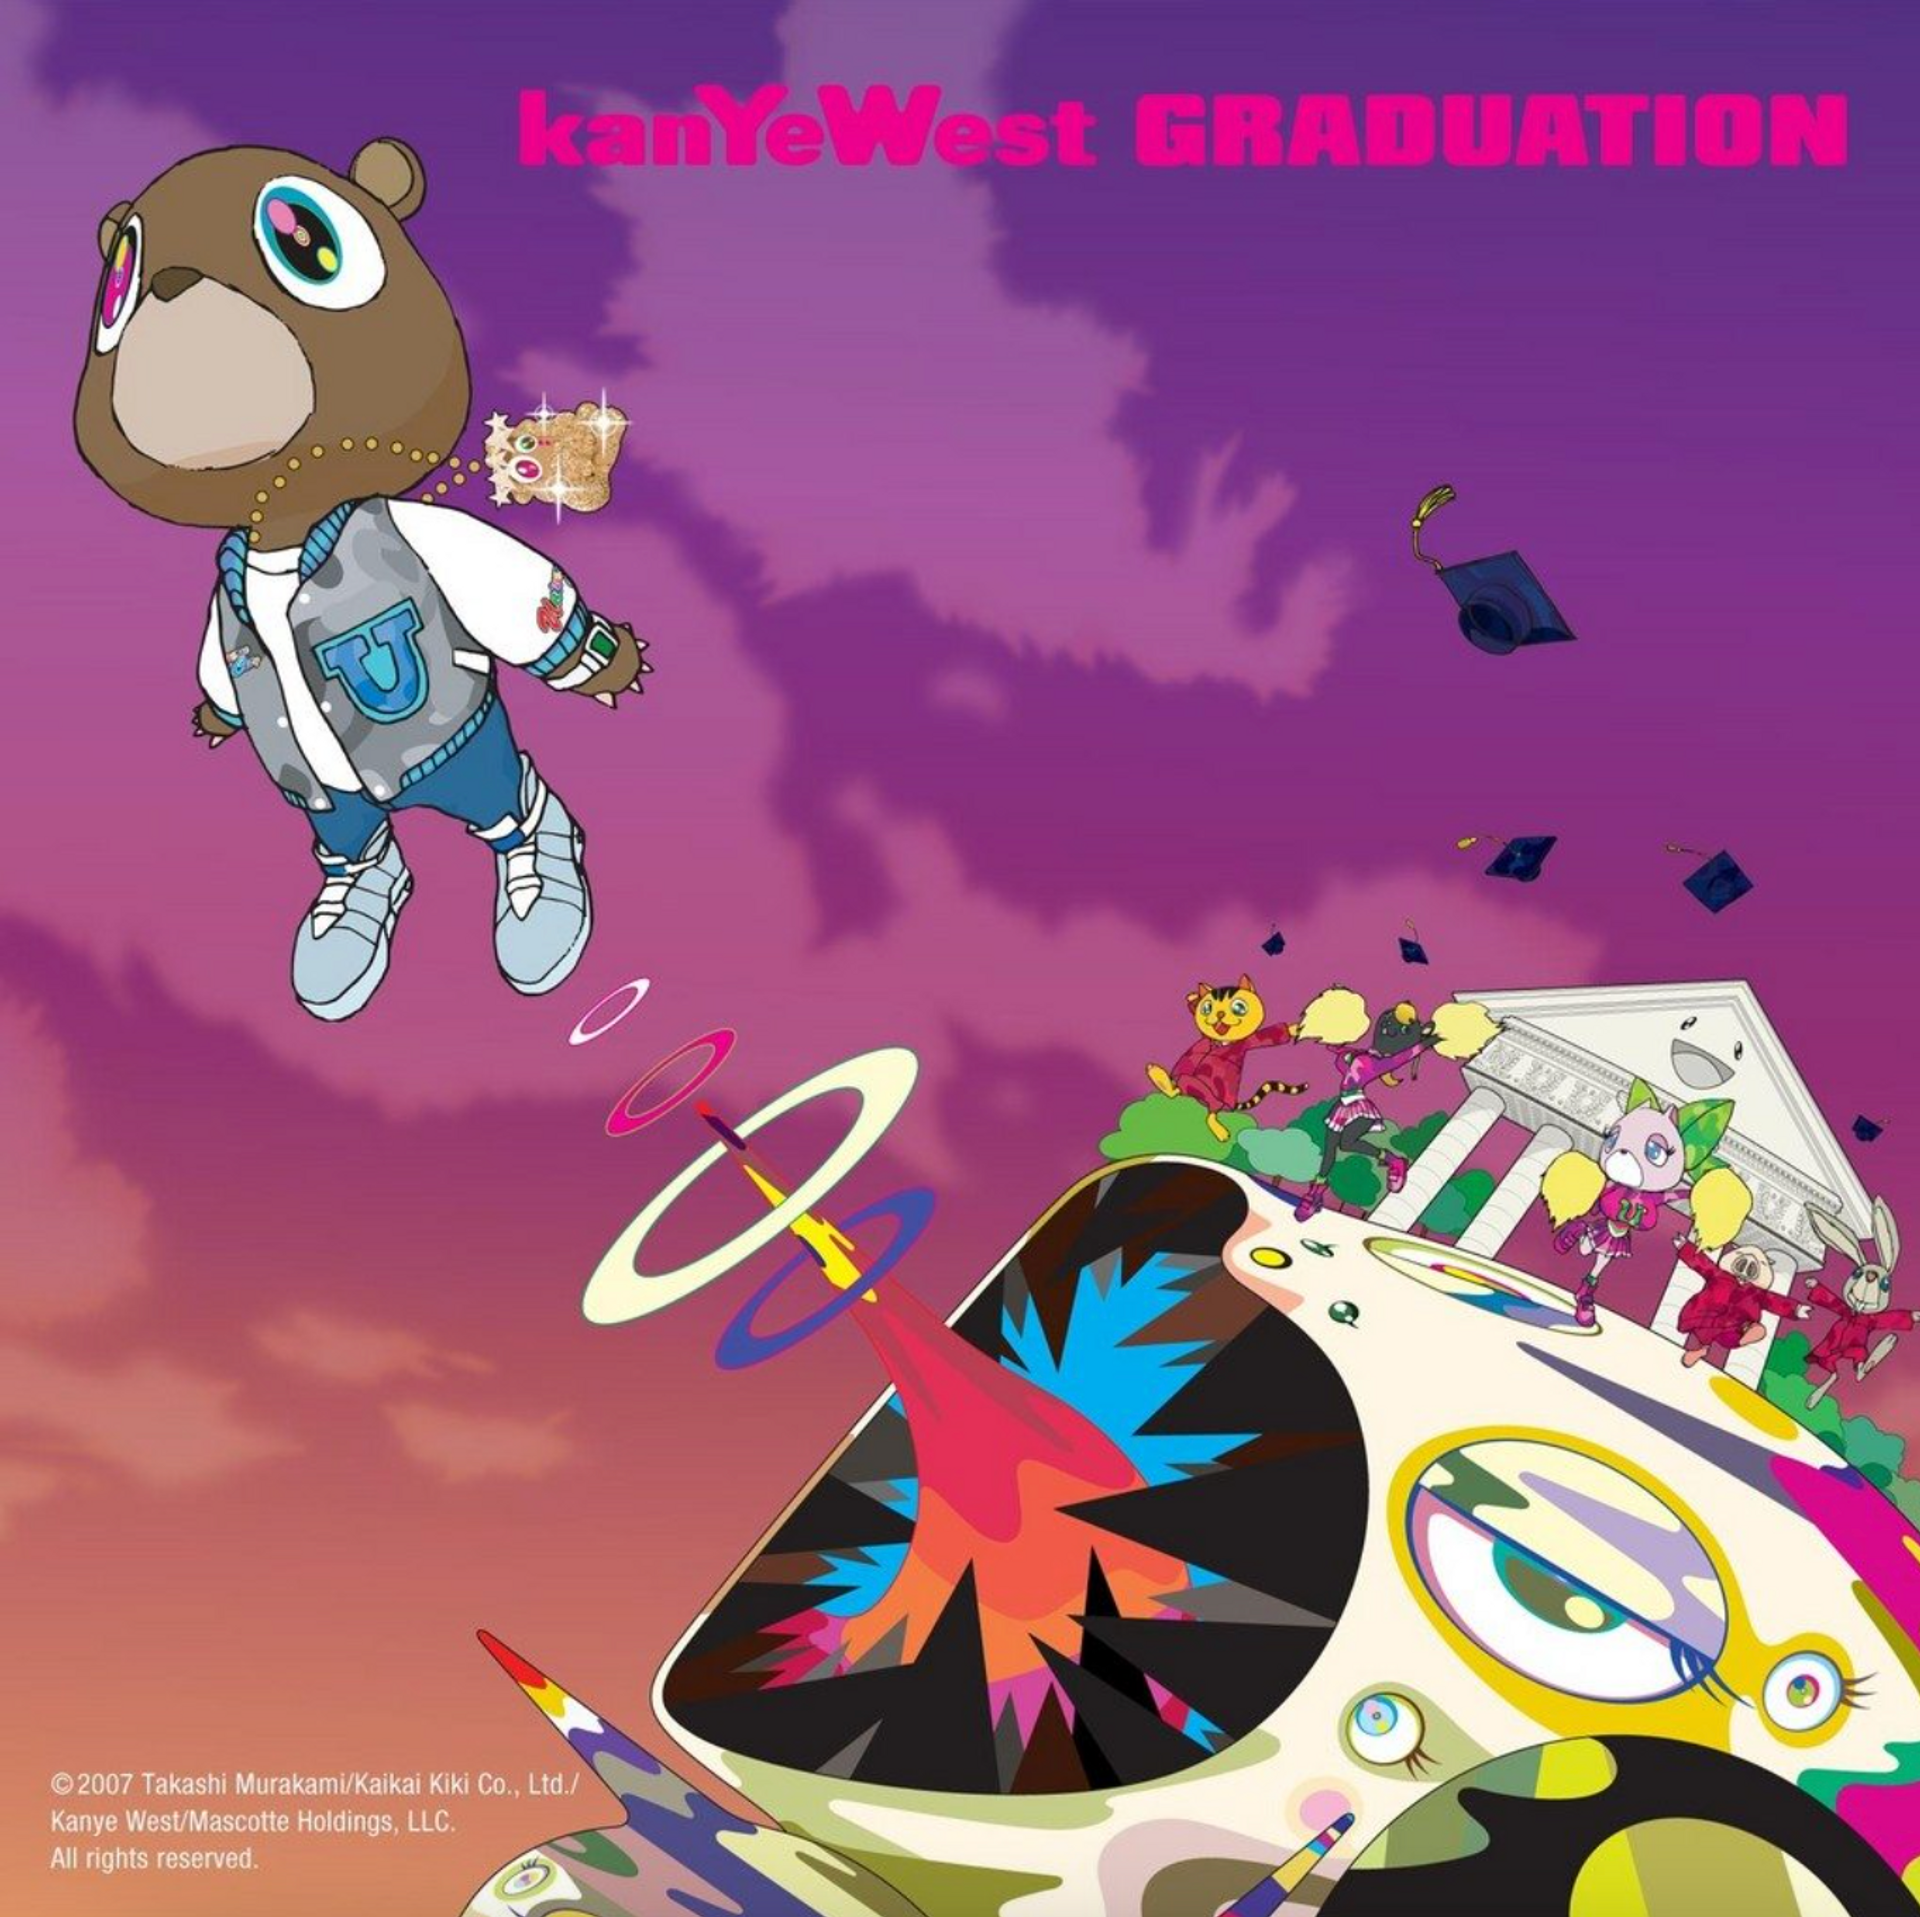 Kanye West, Graduation Cover Artwork by Takashi Murakami 